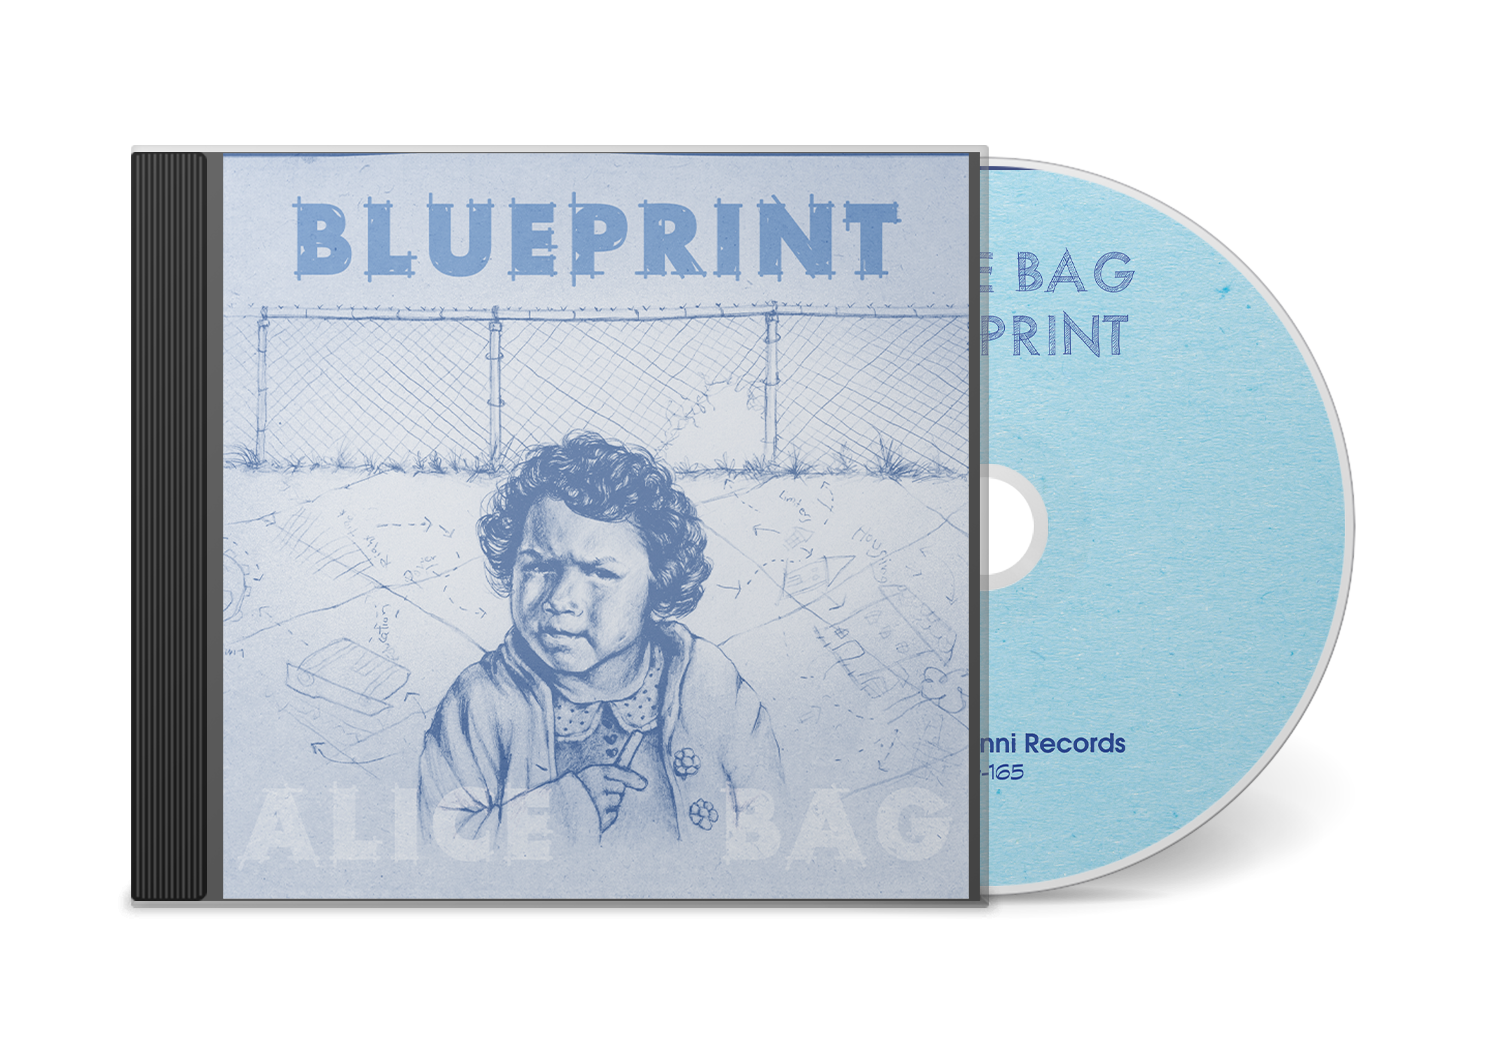 Alice Bag "Blueprint" CD